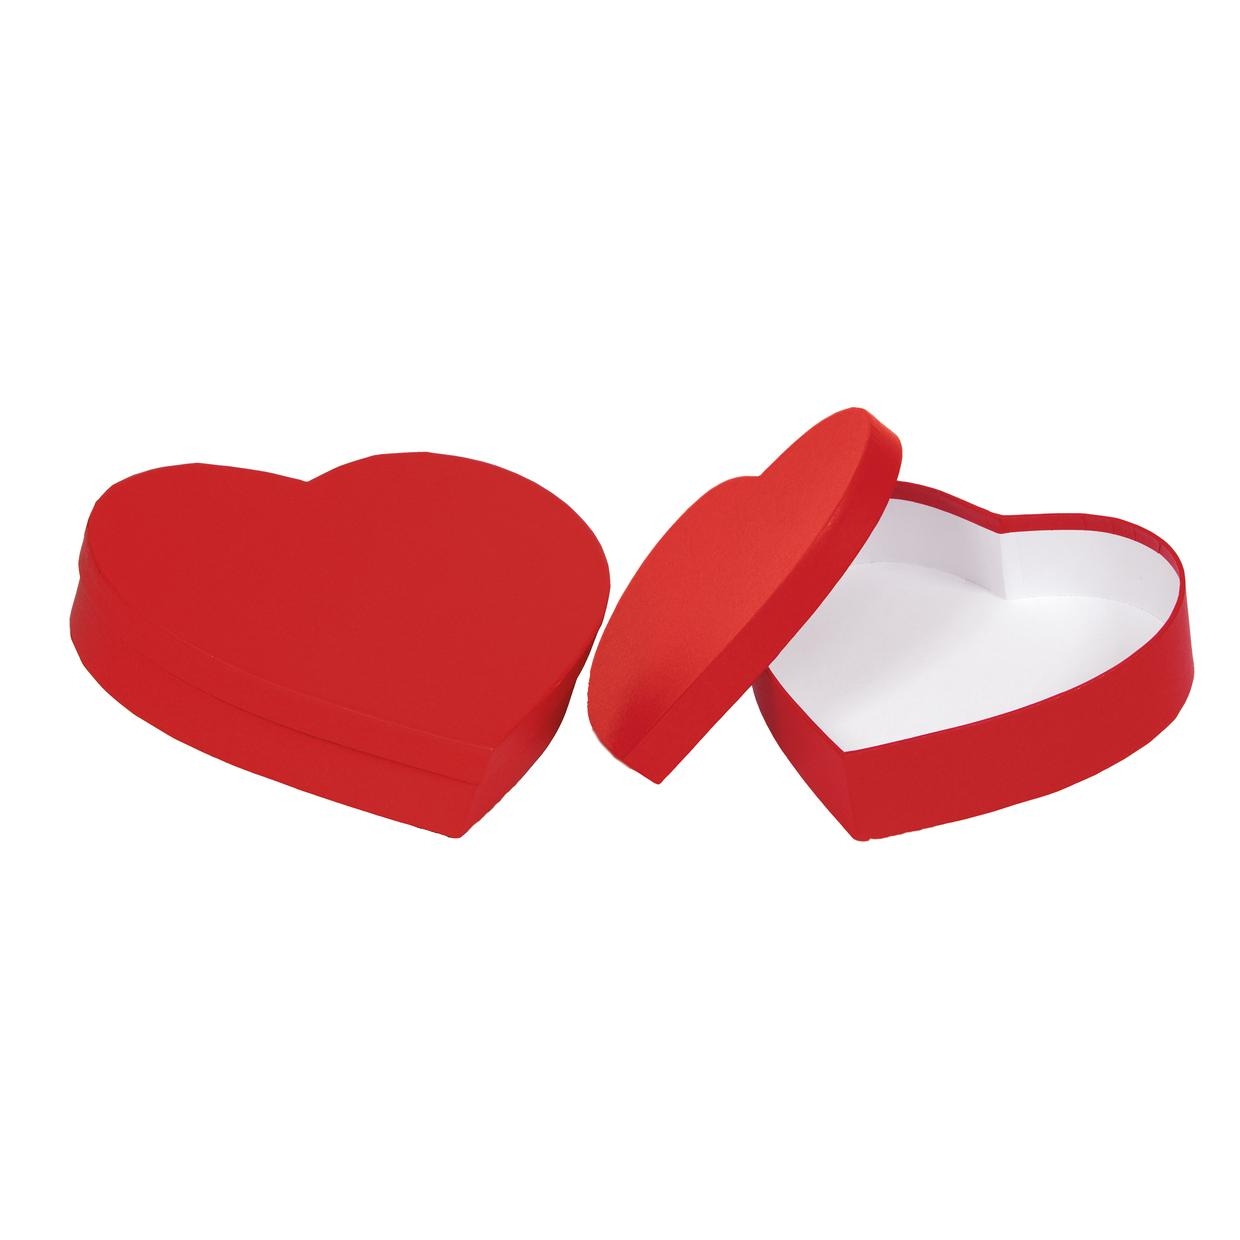 Caja-corazón-san-Valentín-rojo-etiquegrama-valencia-regalo-bombones-dulces-packaging